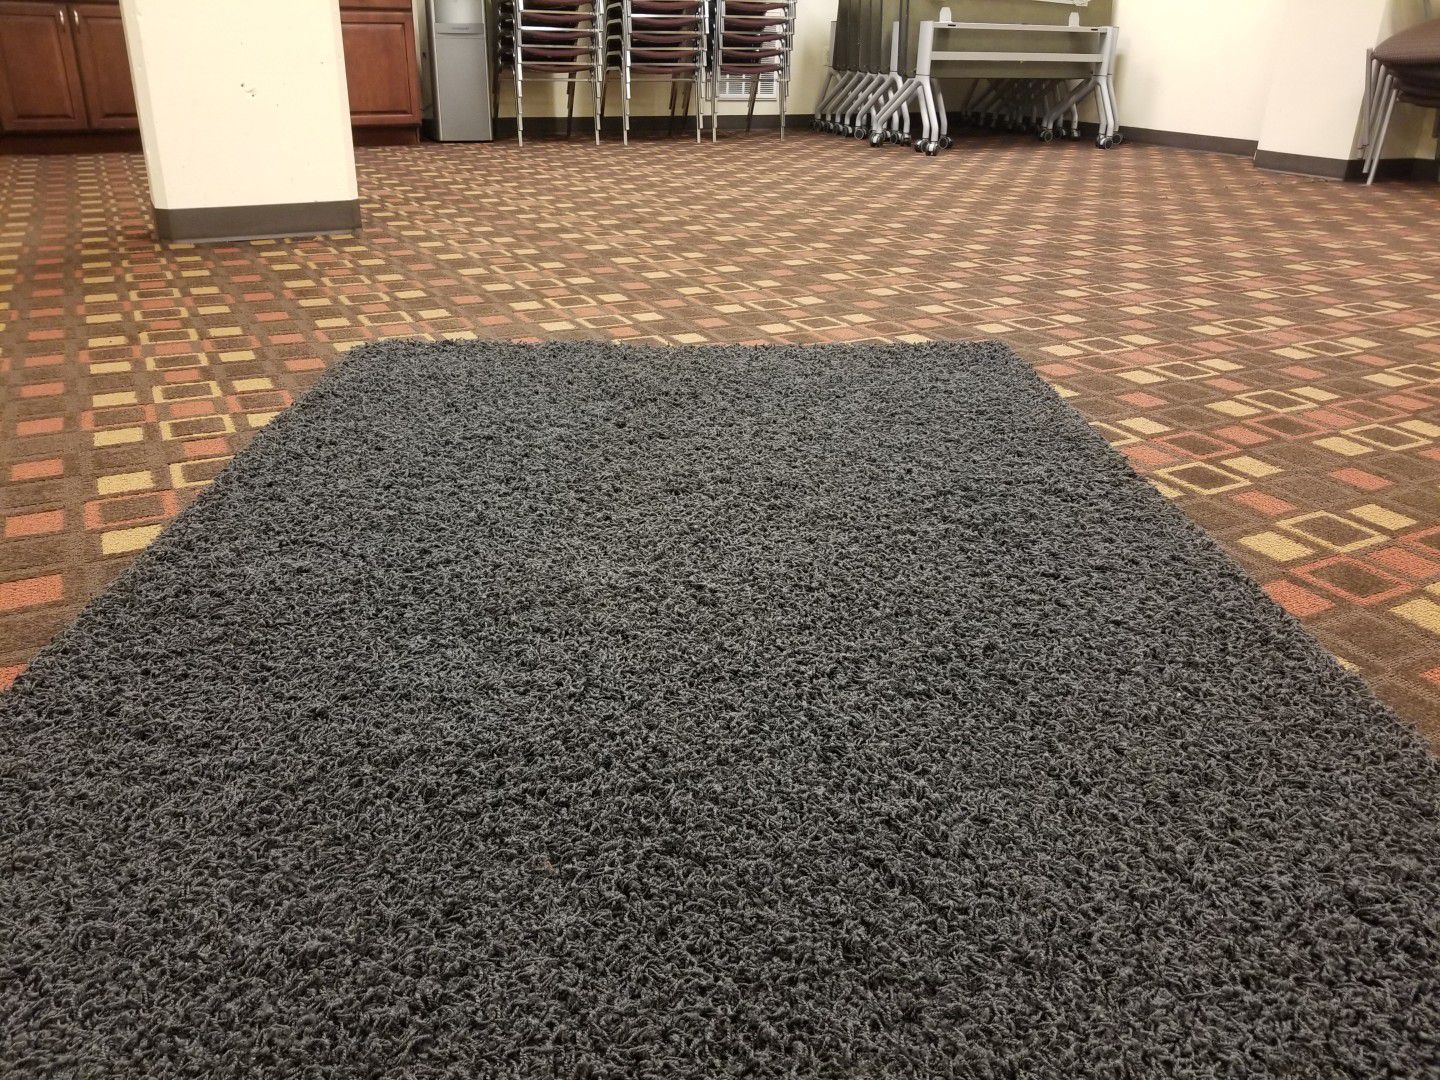 Nice carpet rug for living room